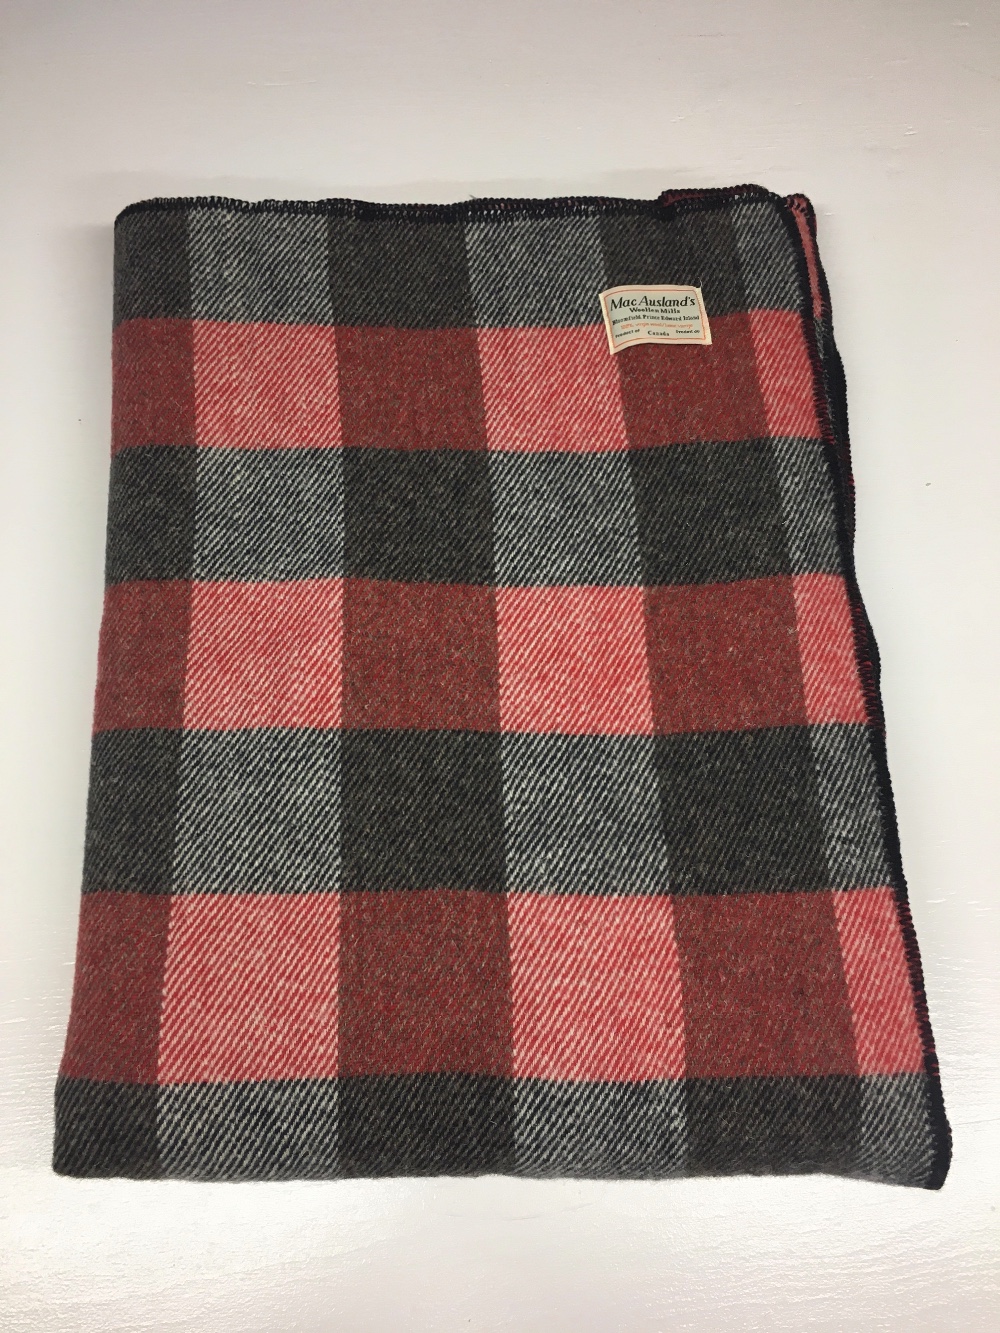 Blankets (checkerboard pattern) - MacAuslands Woolen Mills, Bloomfield, PEI